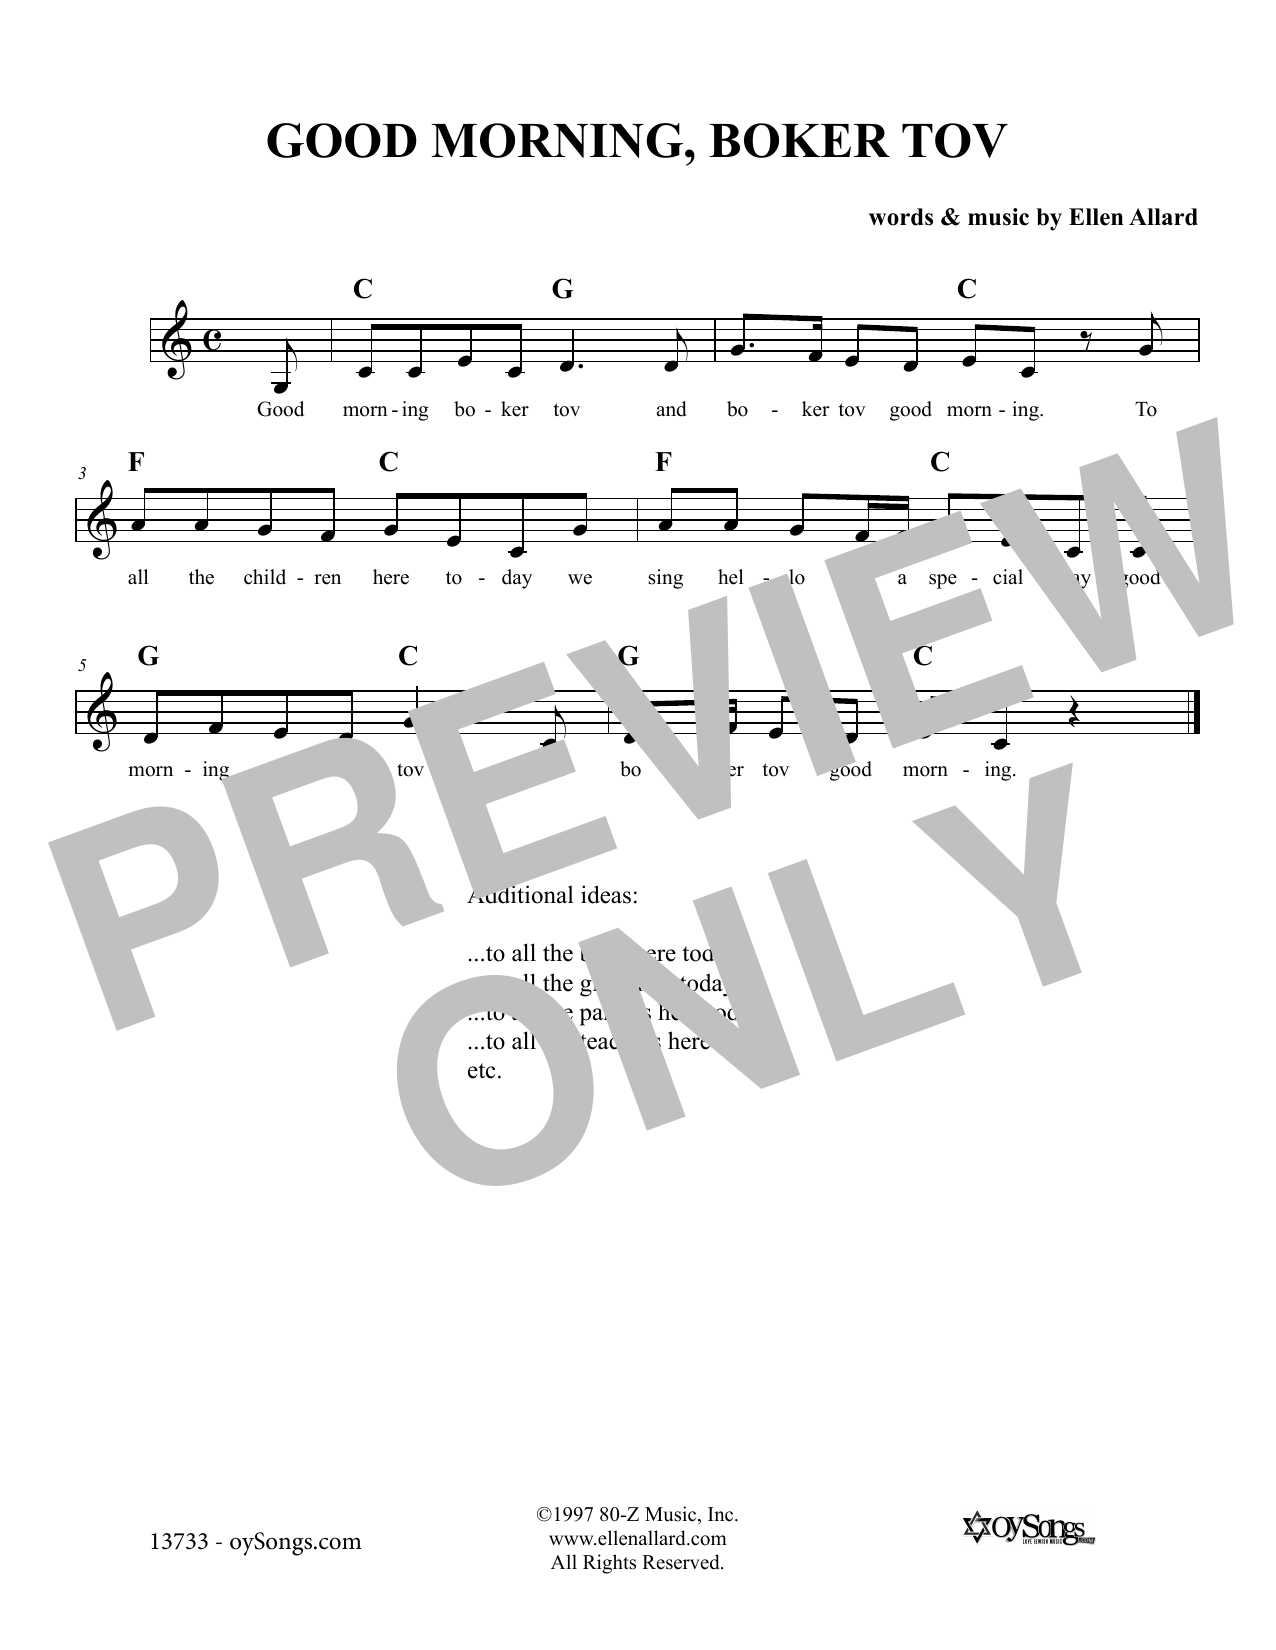 Ellen Allard Good Morning Boker Tov Sheet Music Notes & Chords for Melody Line, Lyrics & Chords - Download or Print PDF